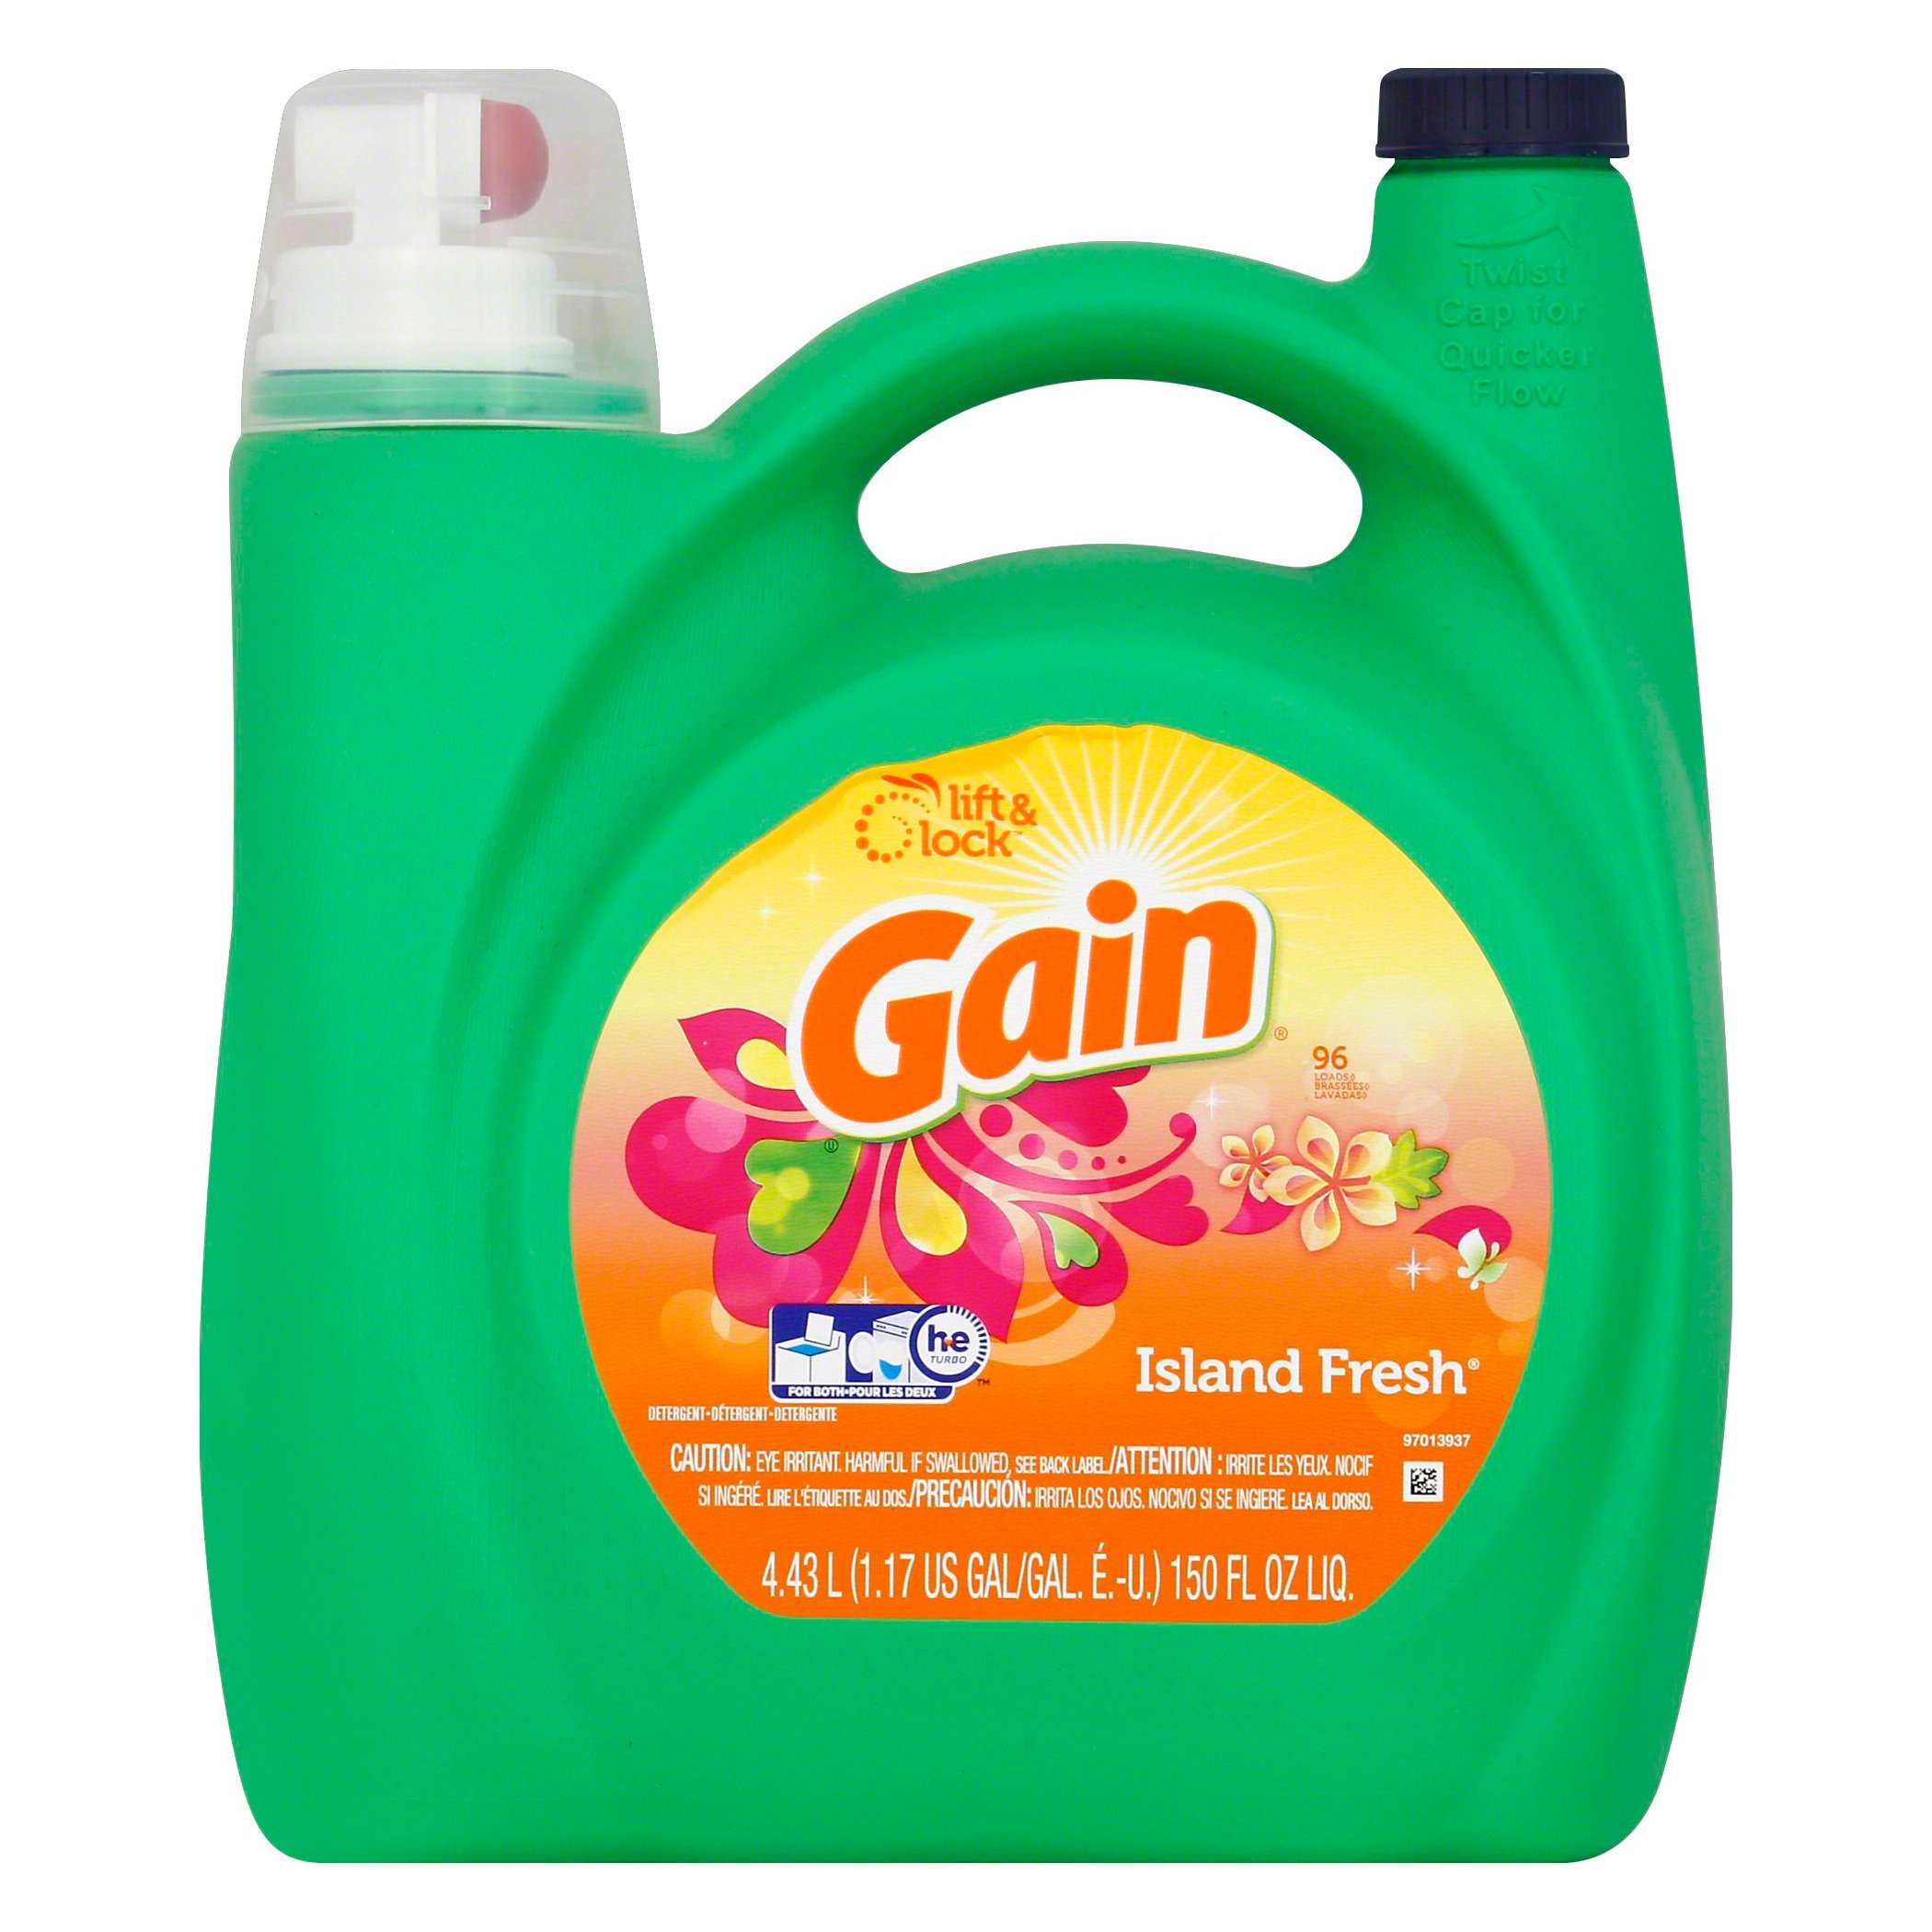 Gain Island Fresh He Liquid Laundry Detergent 96 Loads Shop Detergent At H E B